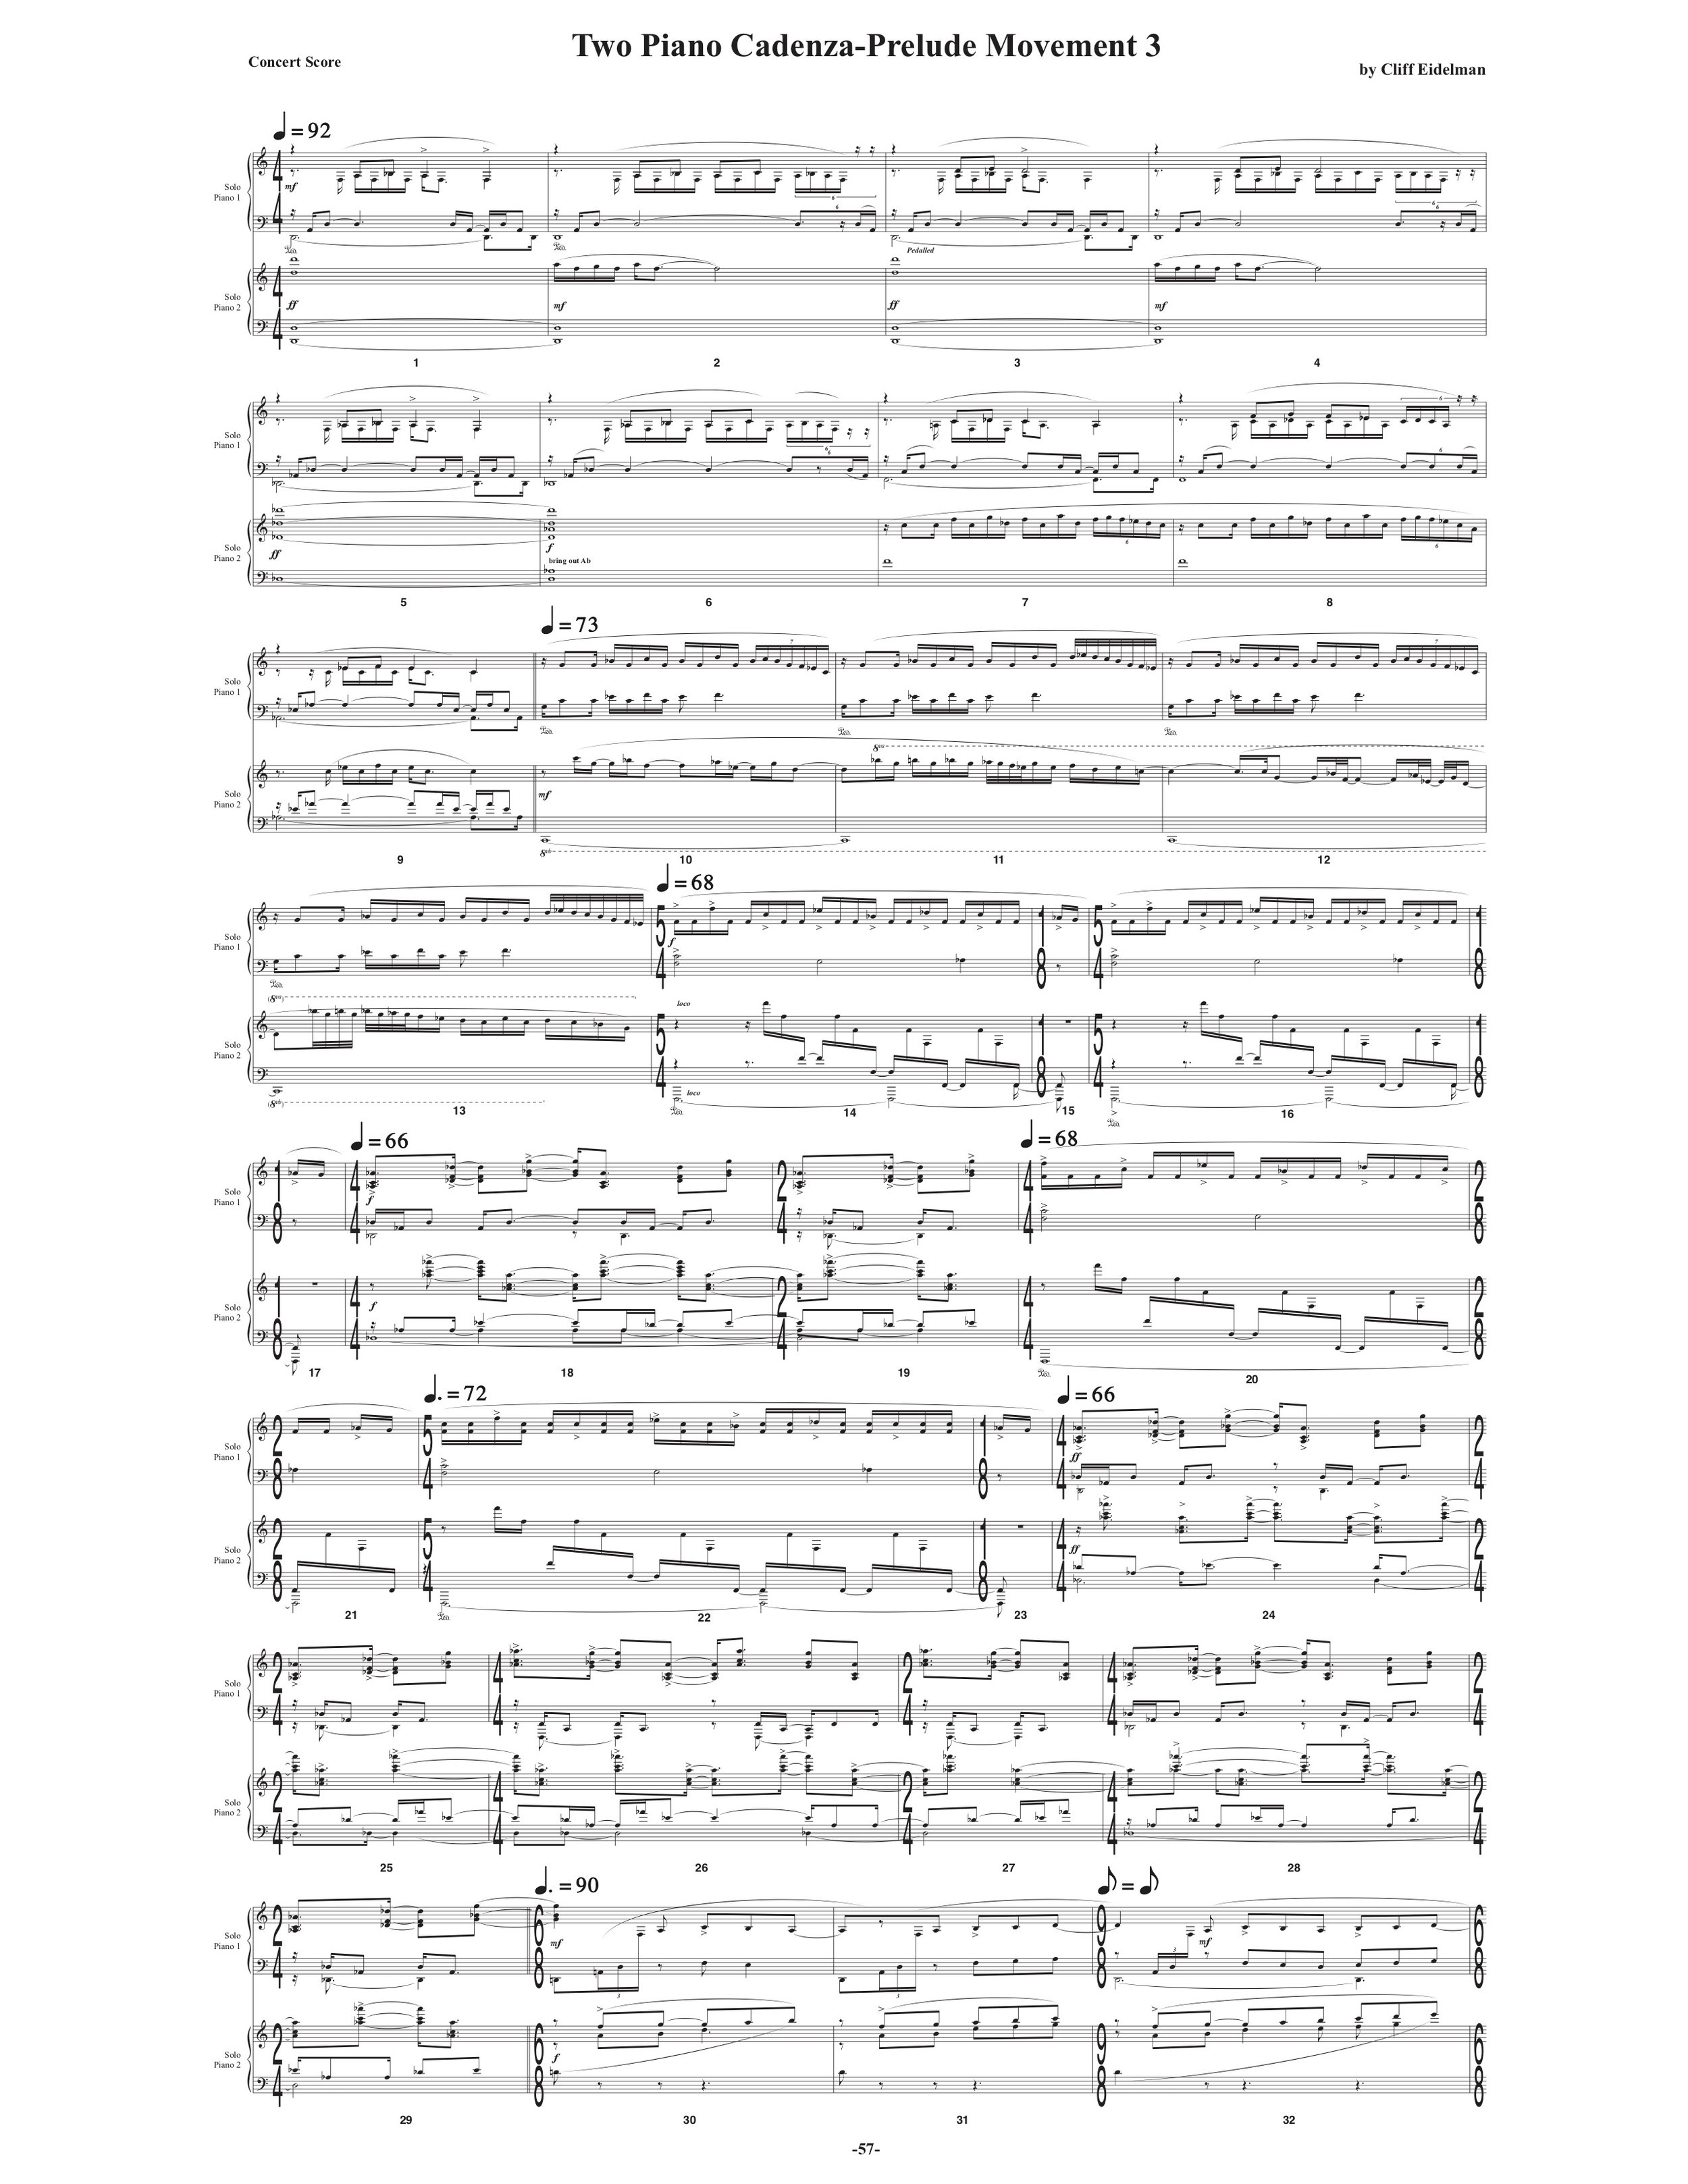 Symphony_Orch & 2 Pianos p62.jpg